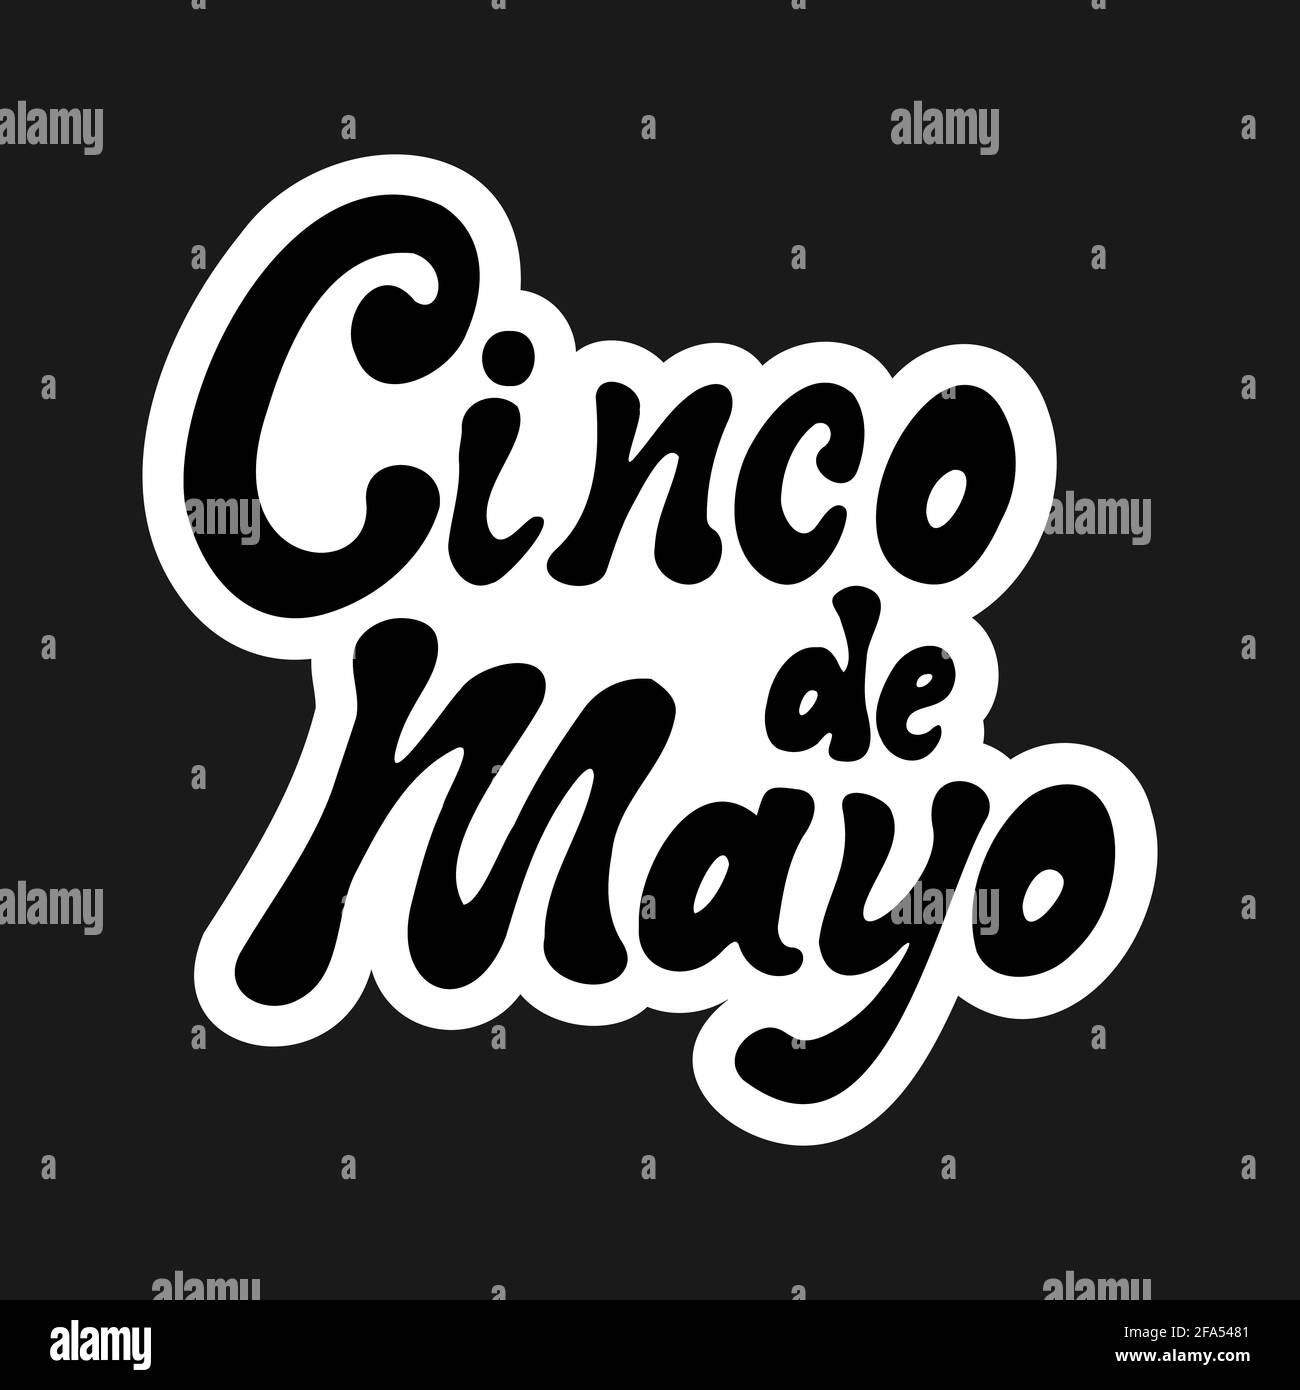 Cinco de mayo sticker. Handwritten lettering phrase design in black and white colors. Vector stock illustration. Stock Vector